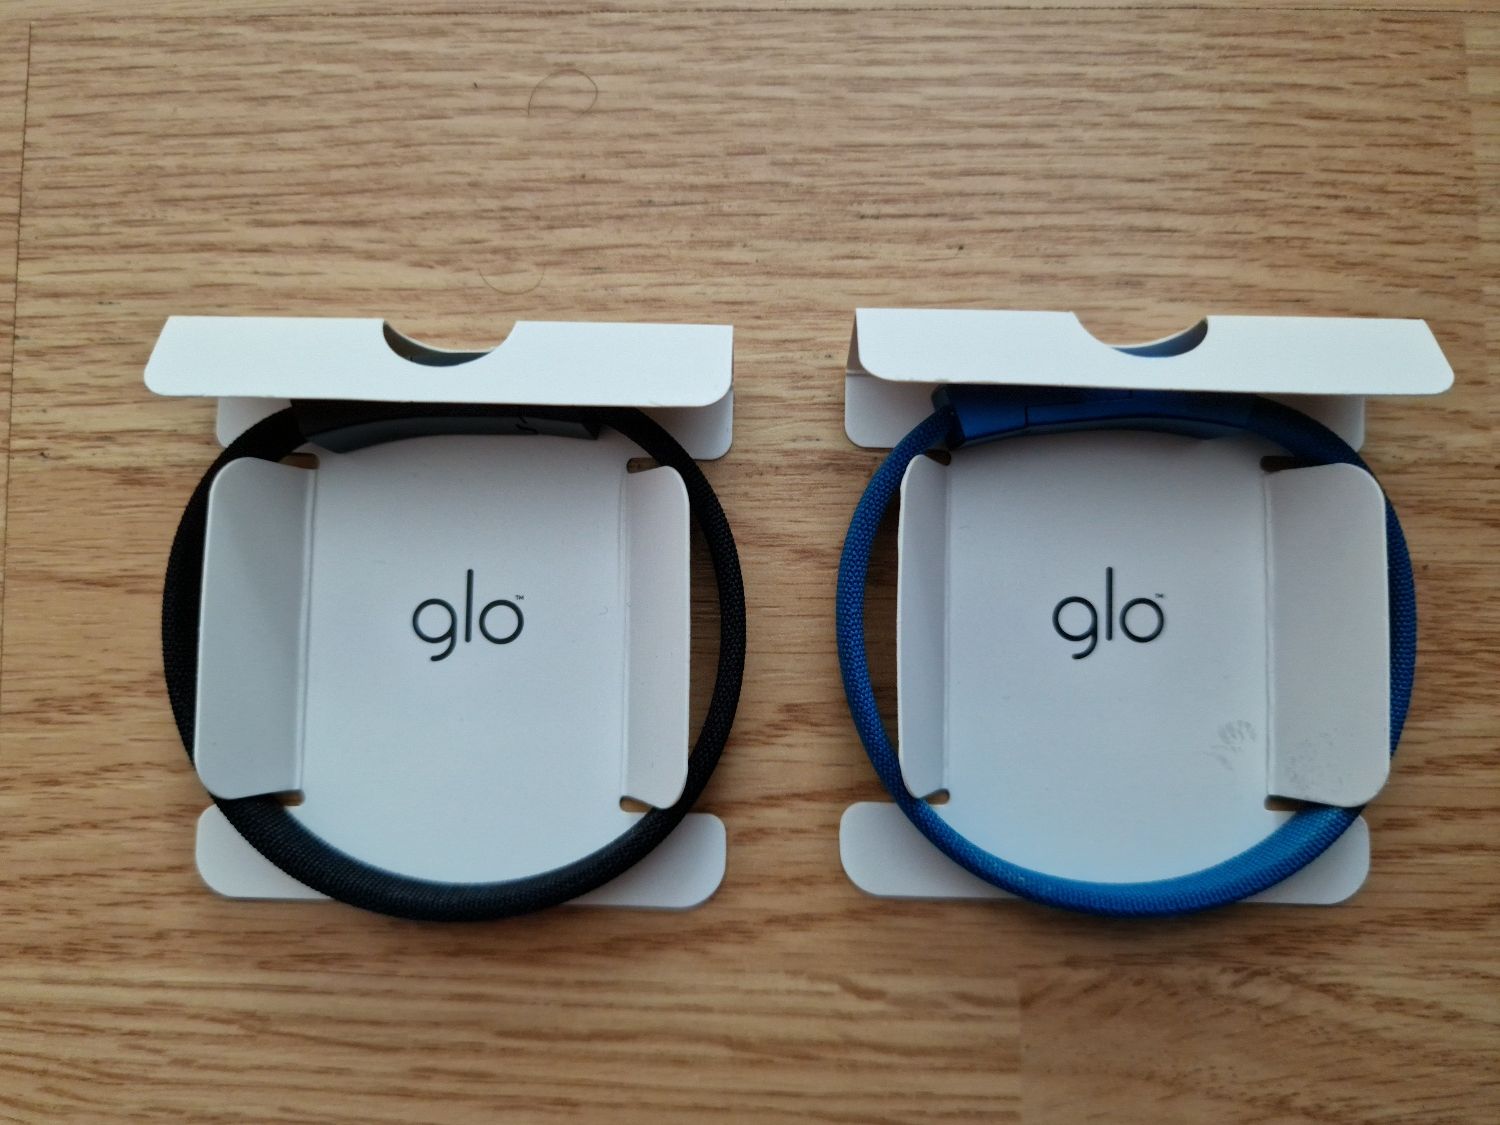 Bratara USB GLO (pentru dispozitive Glo)